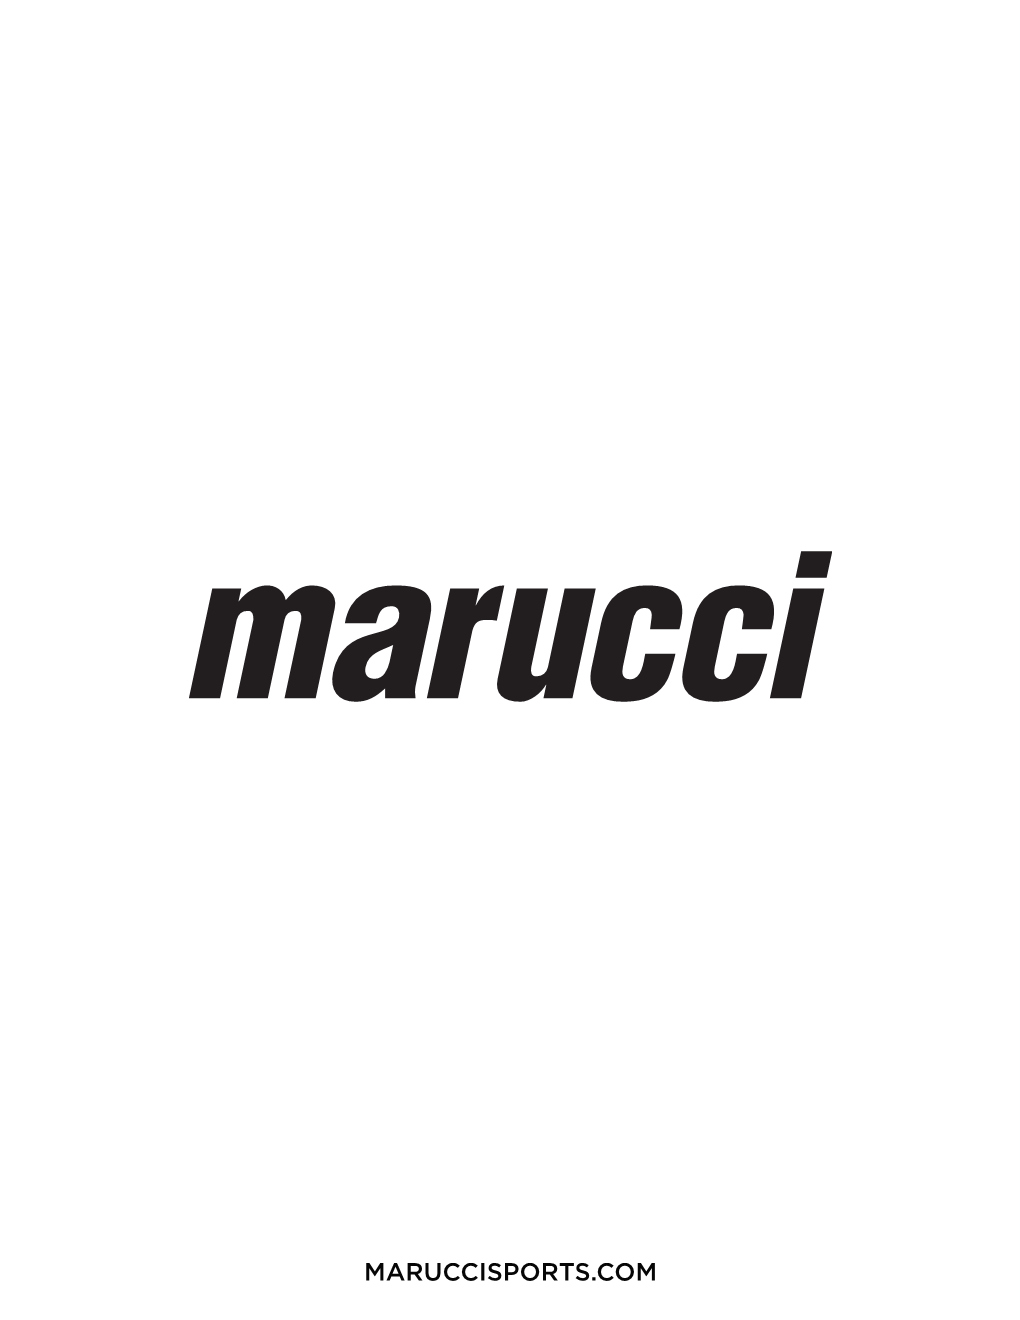 Maruccisports.Com Taking Baseball by Storm